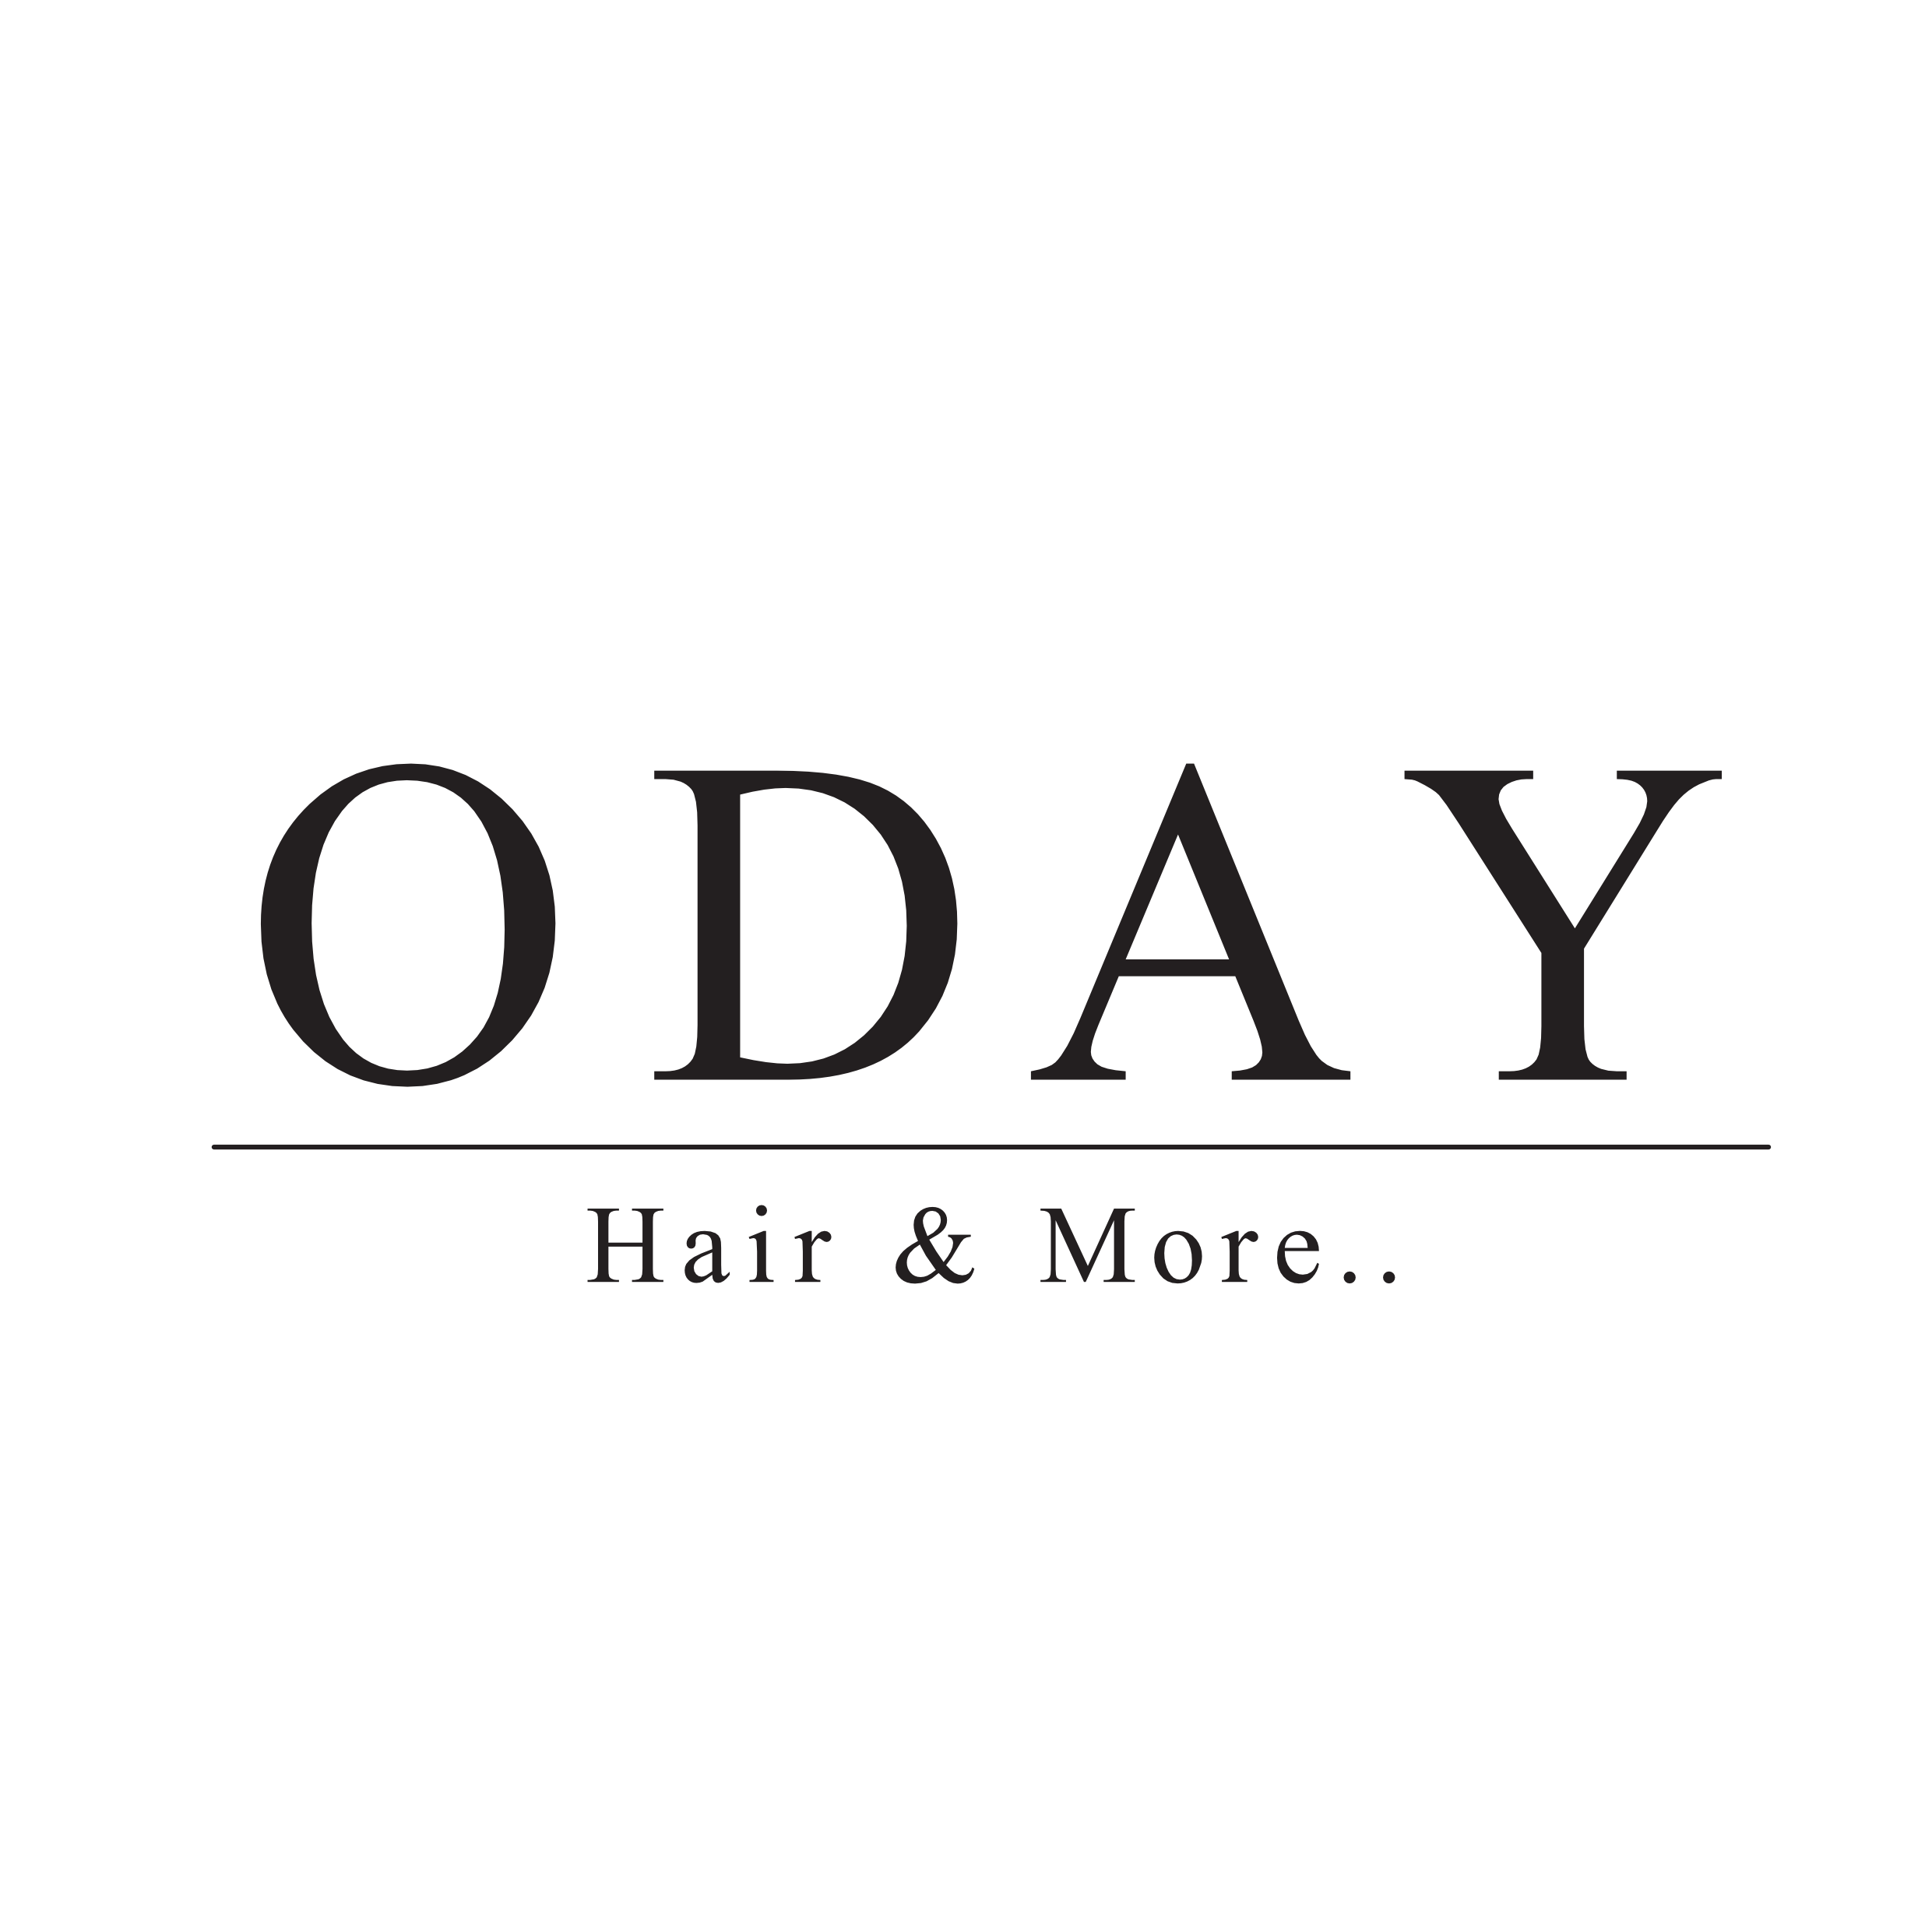 ODAY Hair and More - Friseur Nürnberg Logo